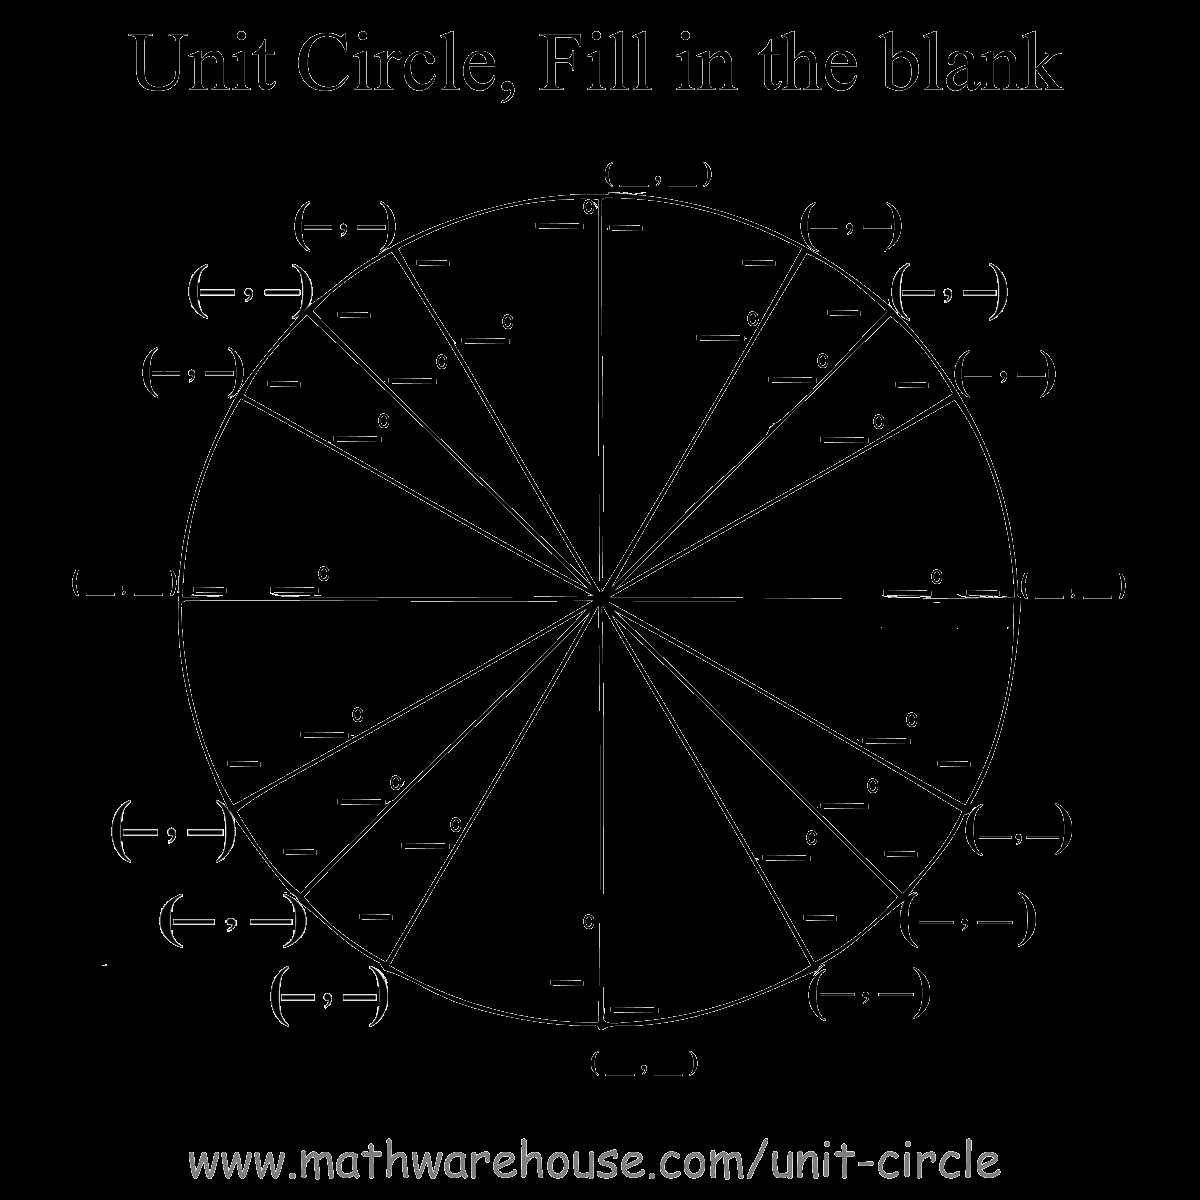 Trigonometry Unit Circle Worksheet Answers Inspirational Of Unit Circle Printables Free Images that You